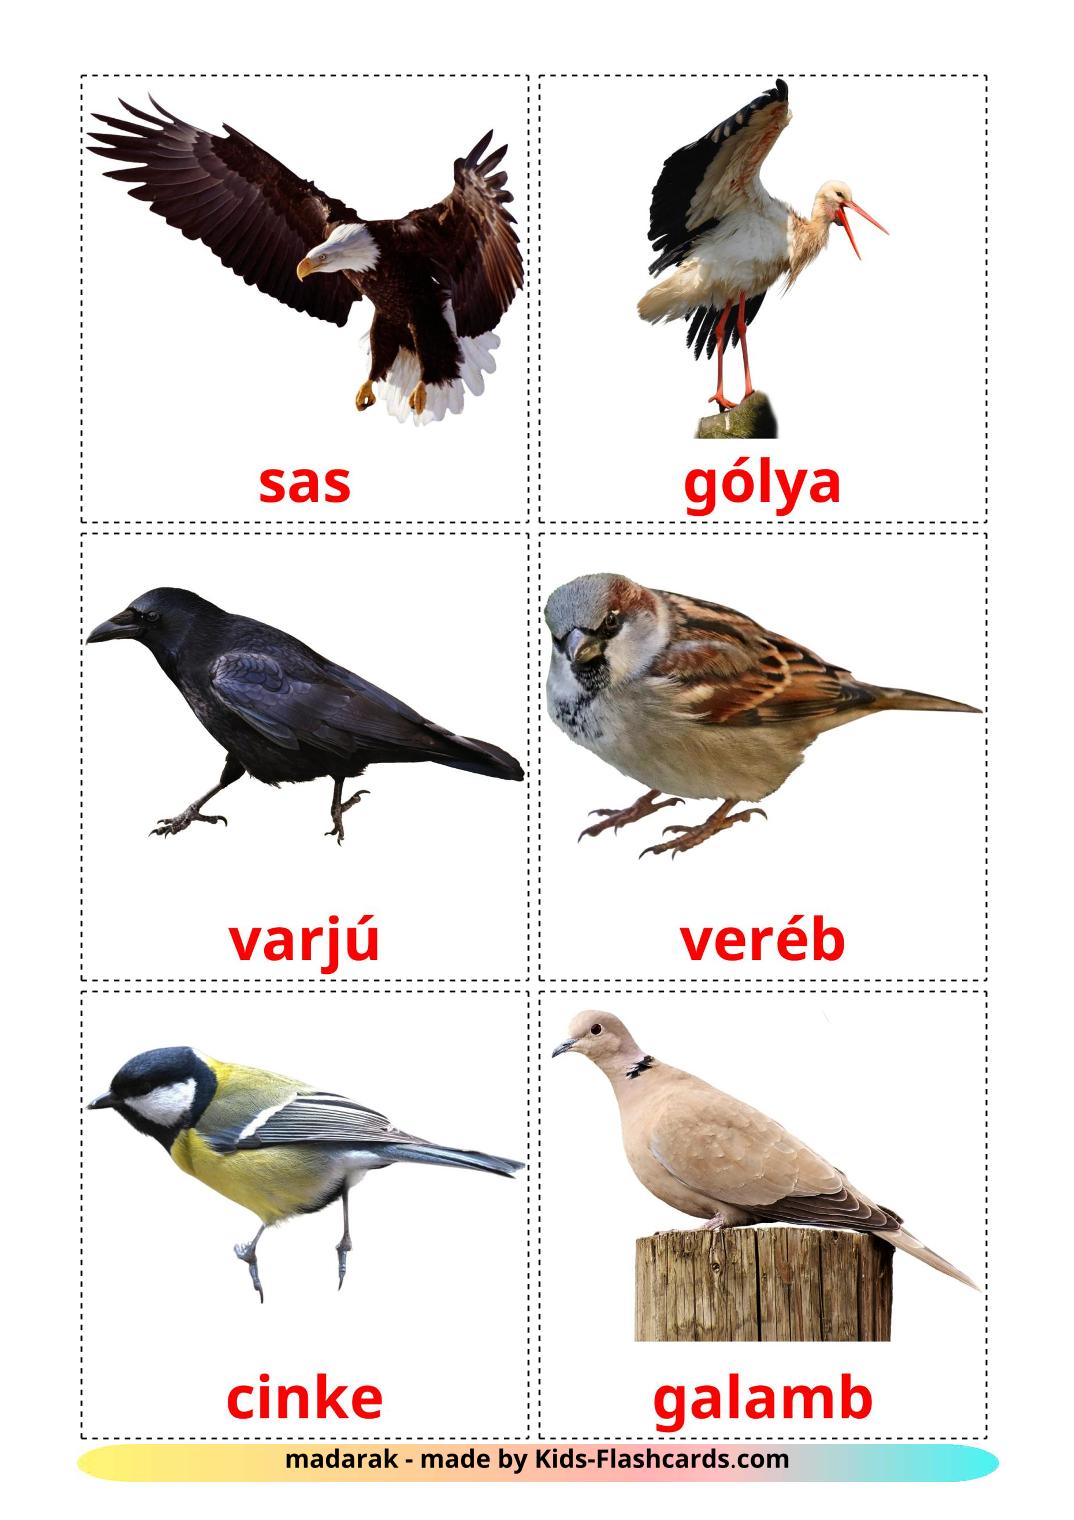 Uccelli selvaggi - 18 flashcards amárica stampabili gratuitamente